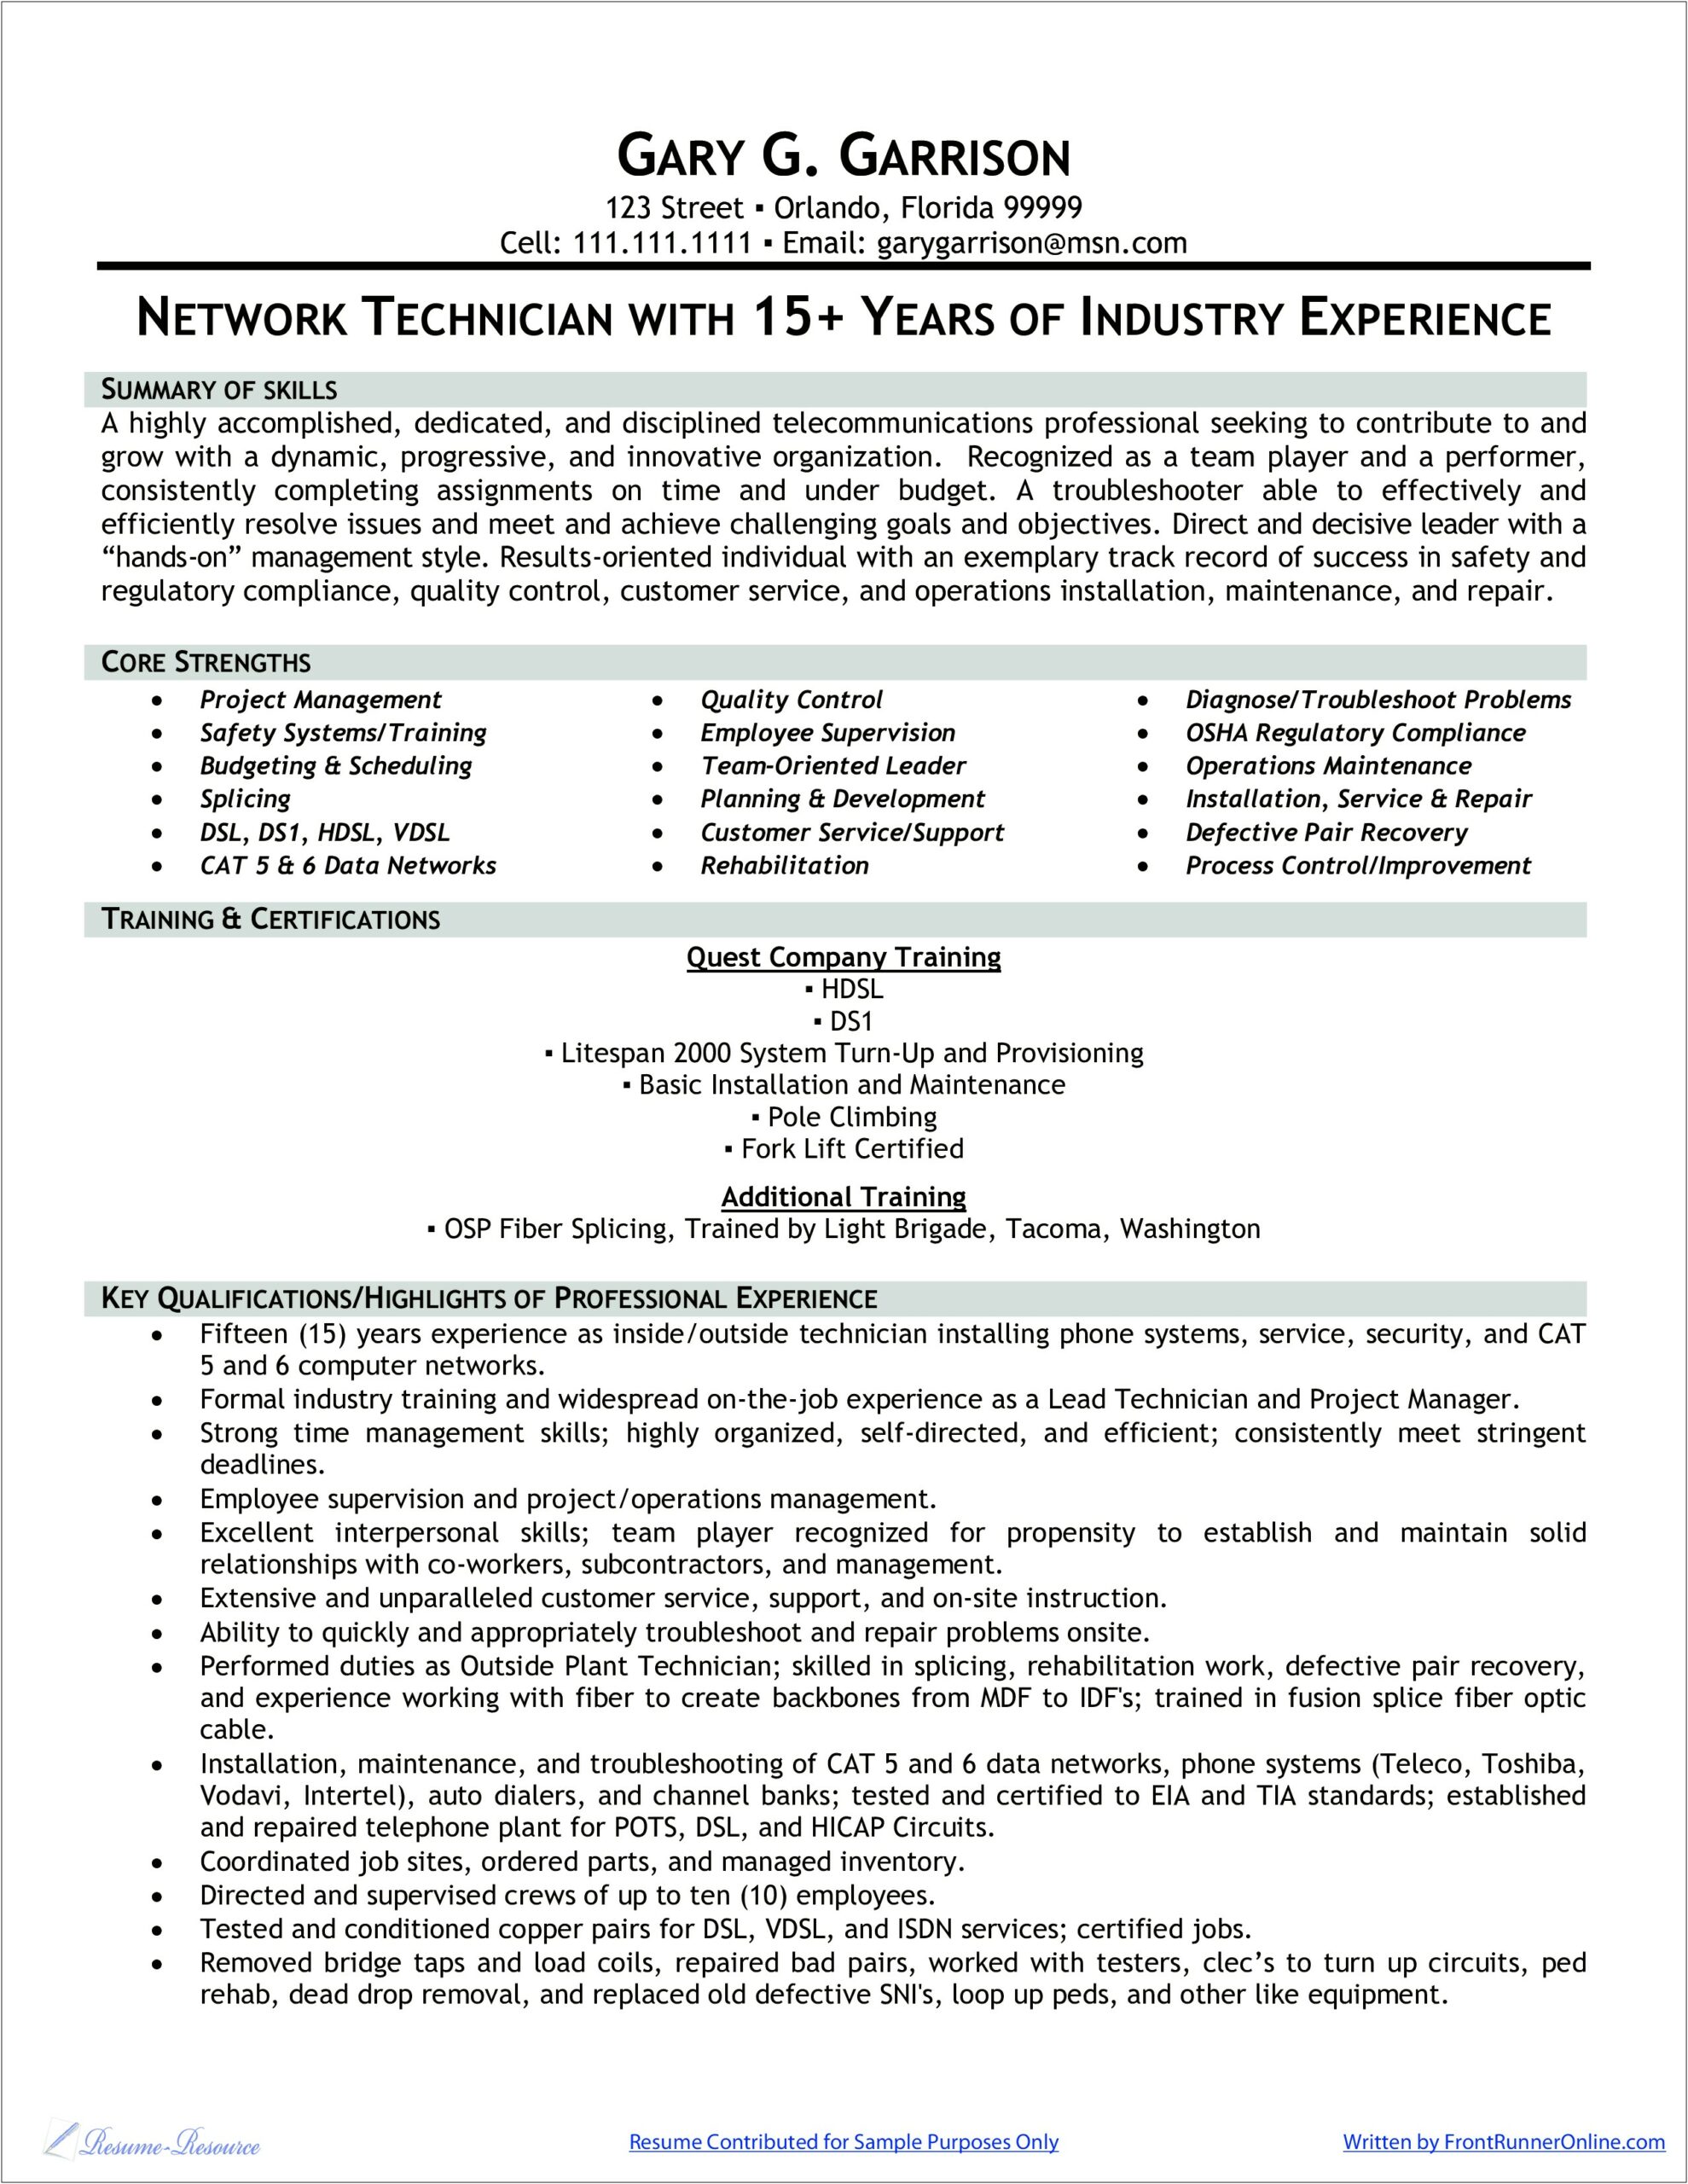 Example Of It Network Technician Resume